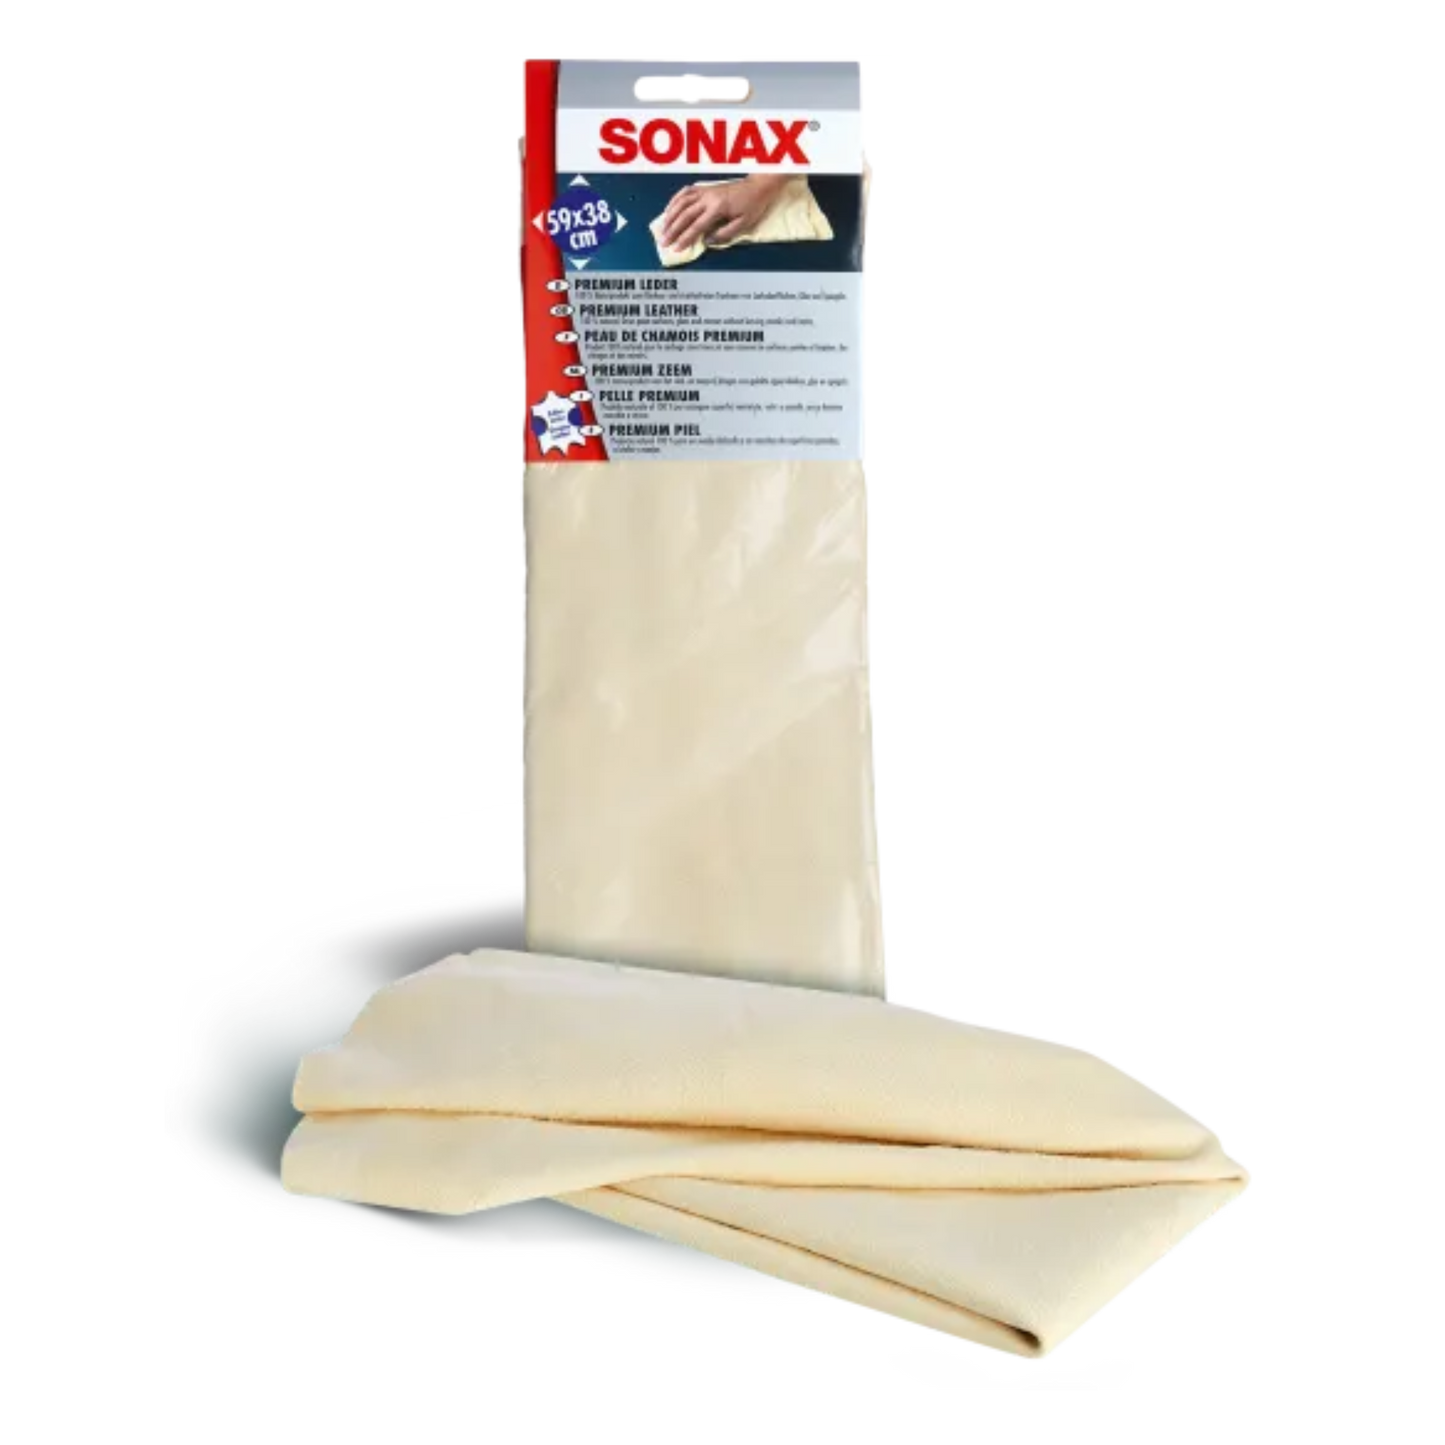 SONAX Premiumleder